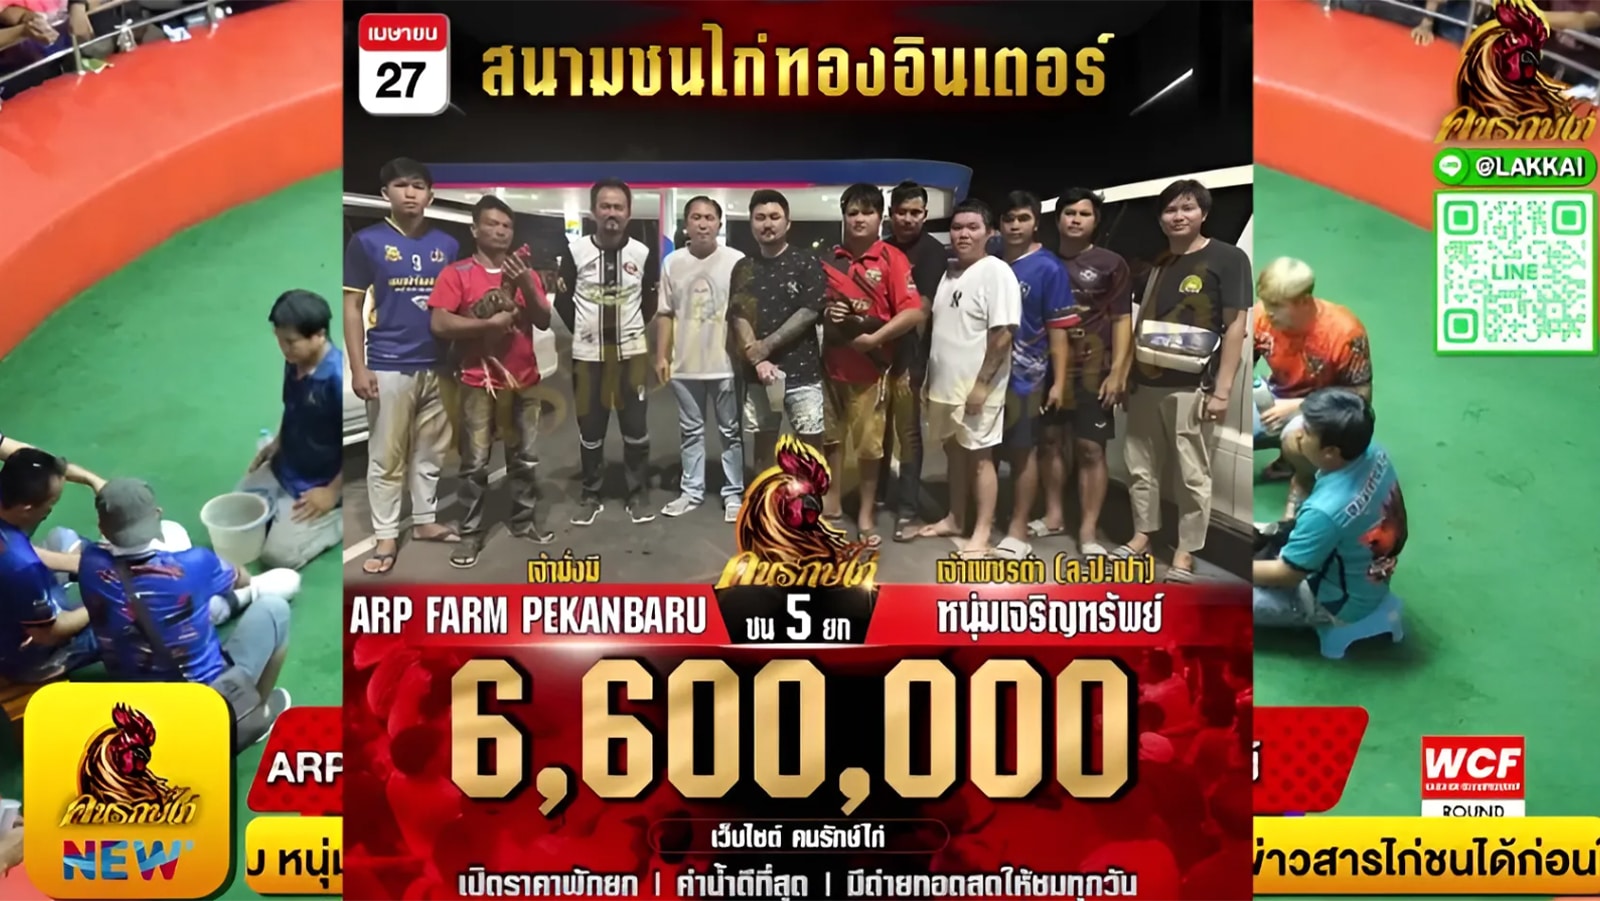 ARP-FARM-PEKANBARU-พบ-หนุ่มเจริญทรัพย์-ชิงเงิน-6,600,000-บาท